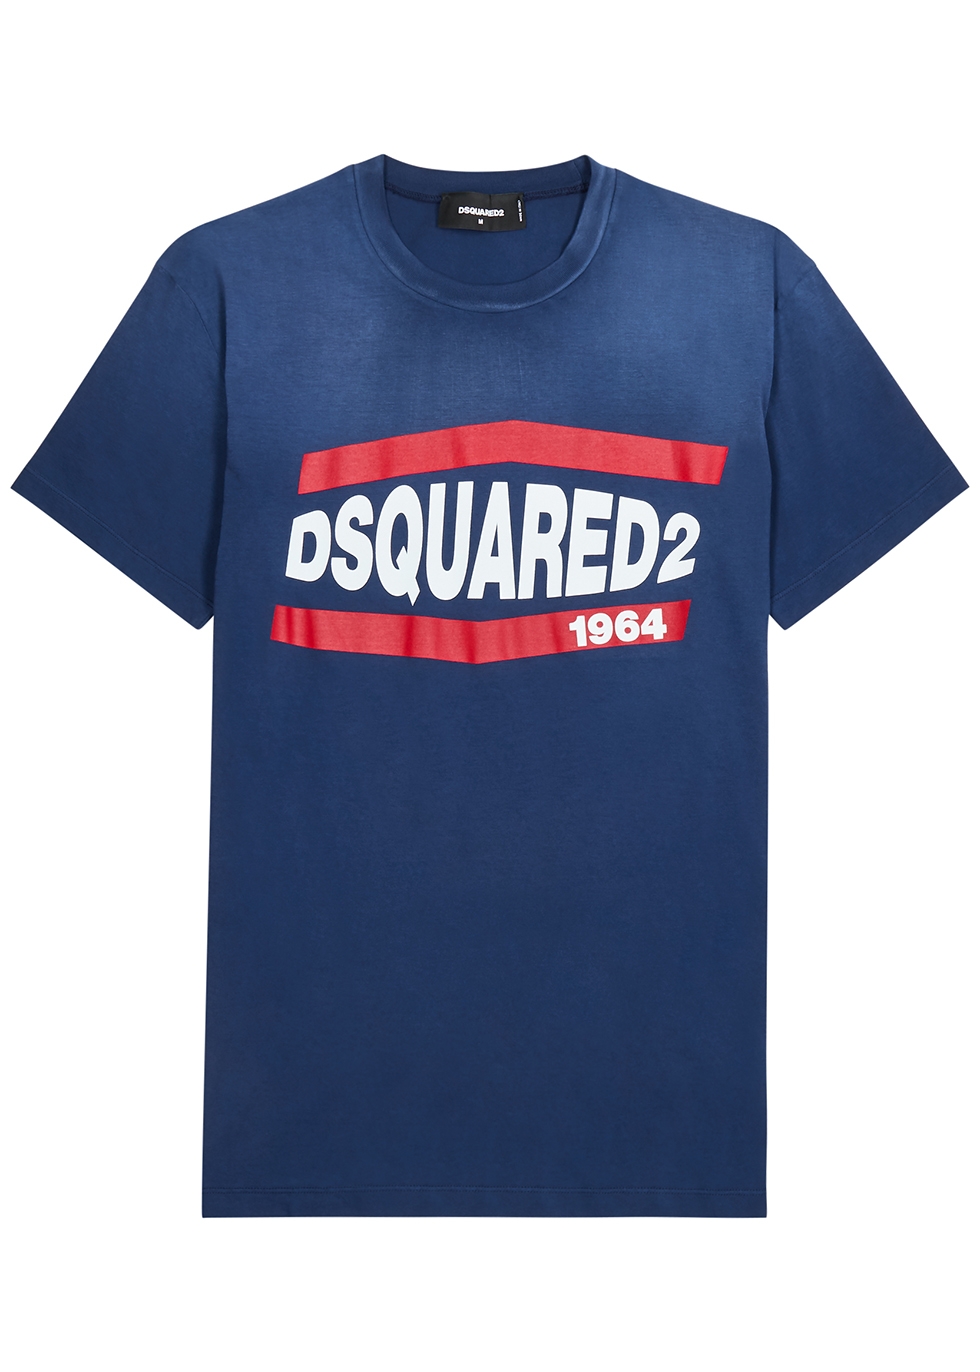 dsquared2 blue t shirt